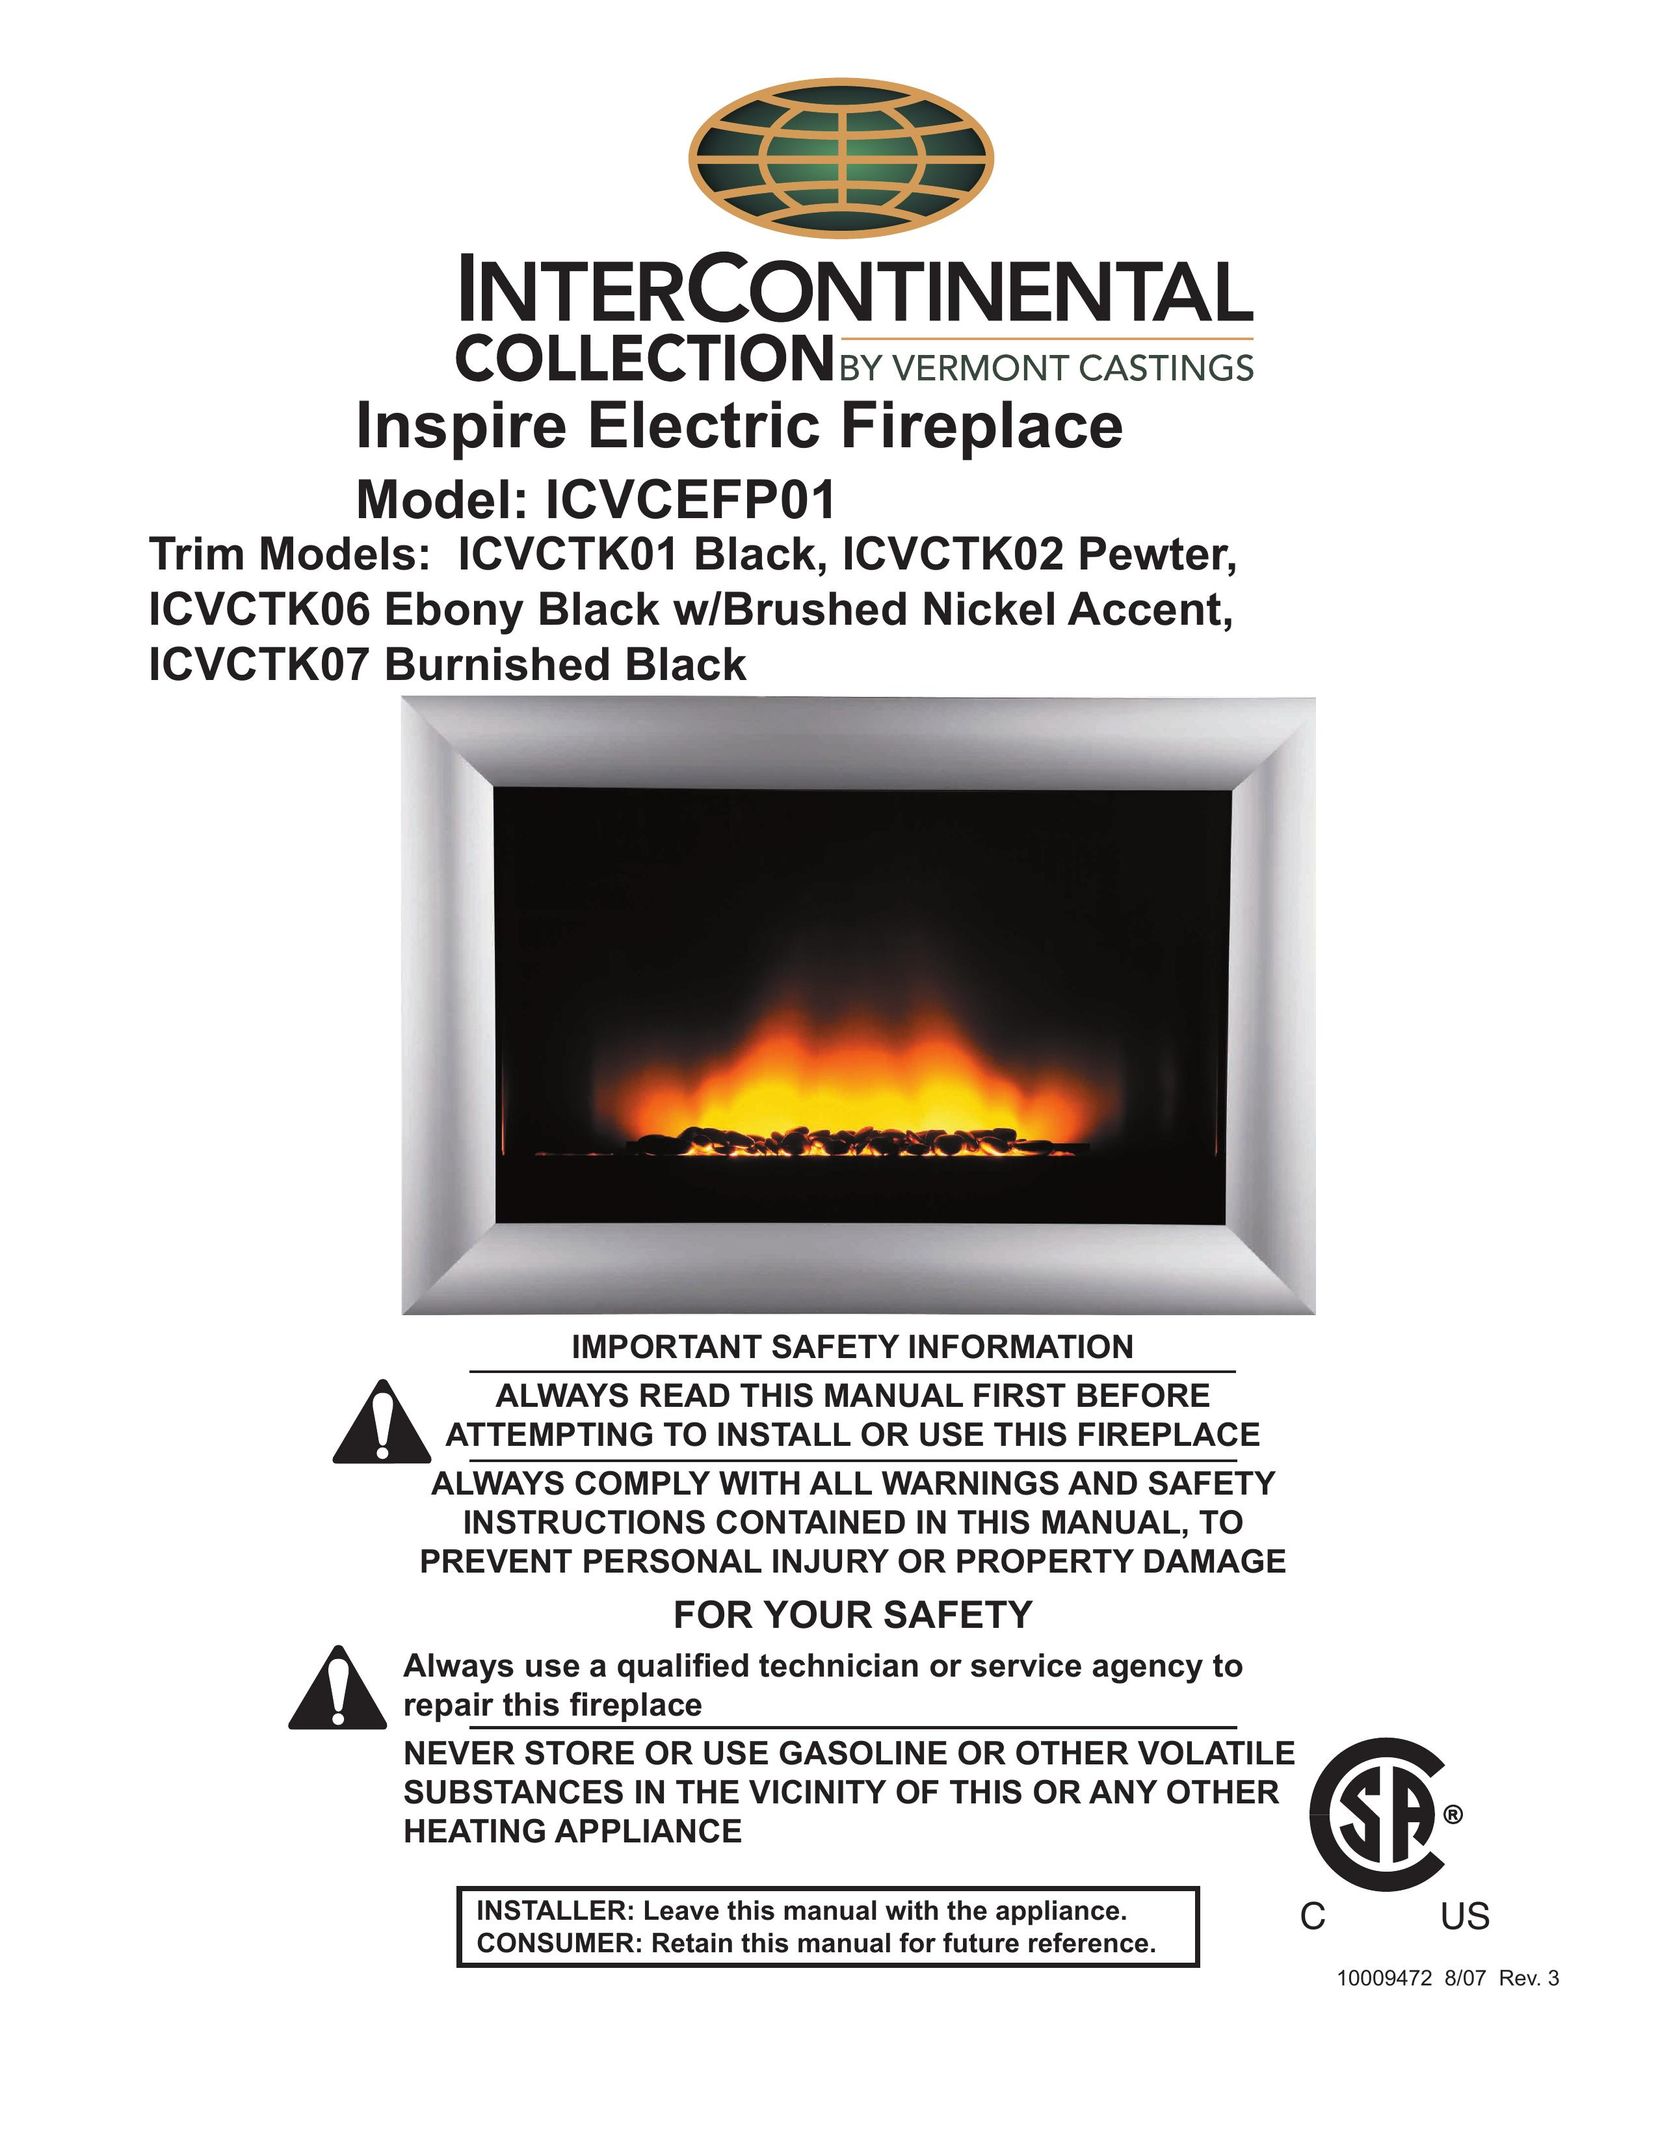 CFM Corporation ICVCEFP01 Indoor Fireplace User Manual